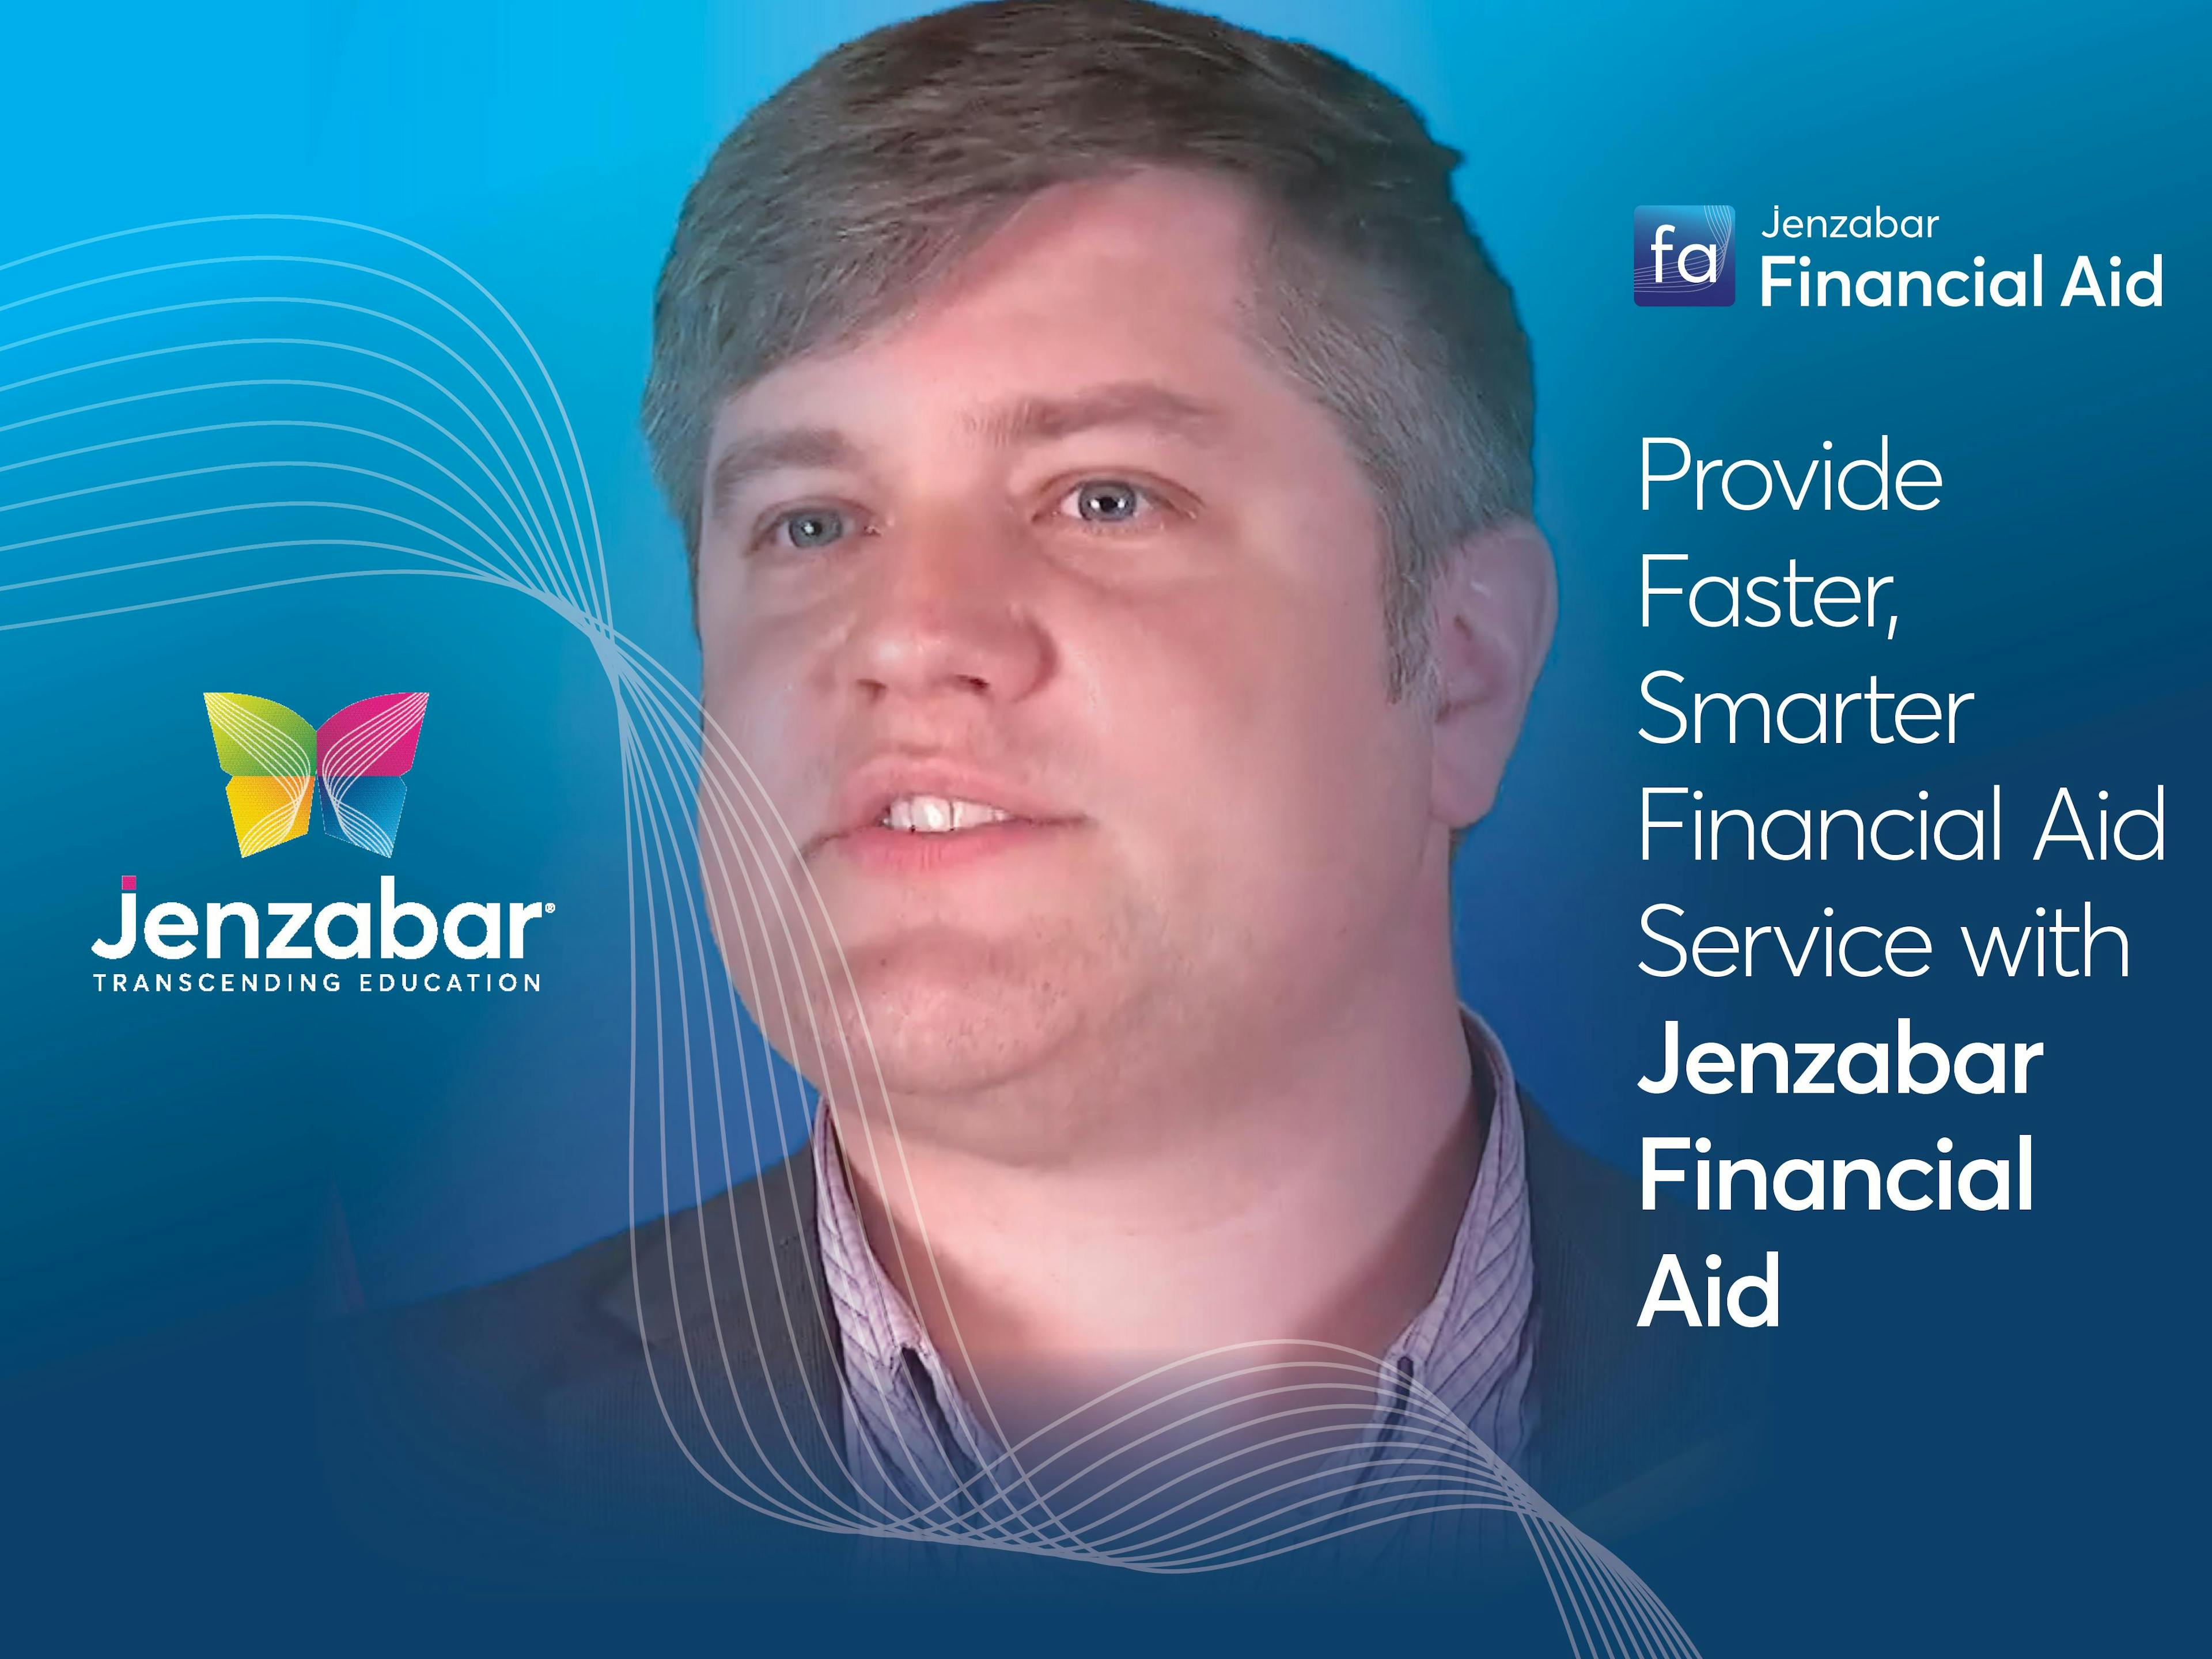 Jenzabar Financial Aid